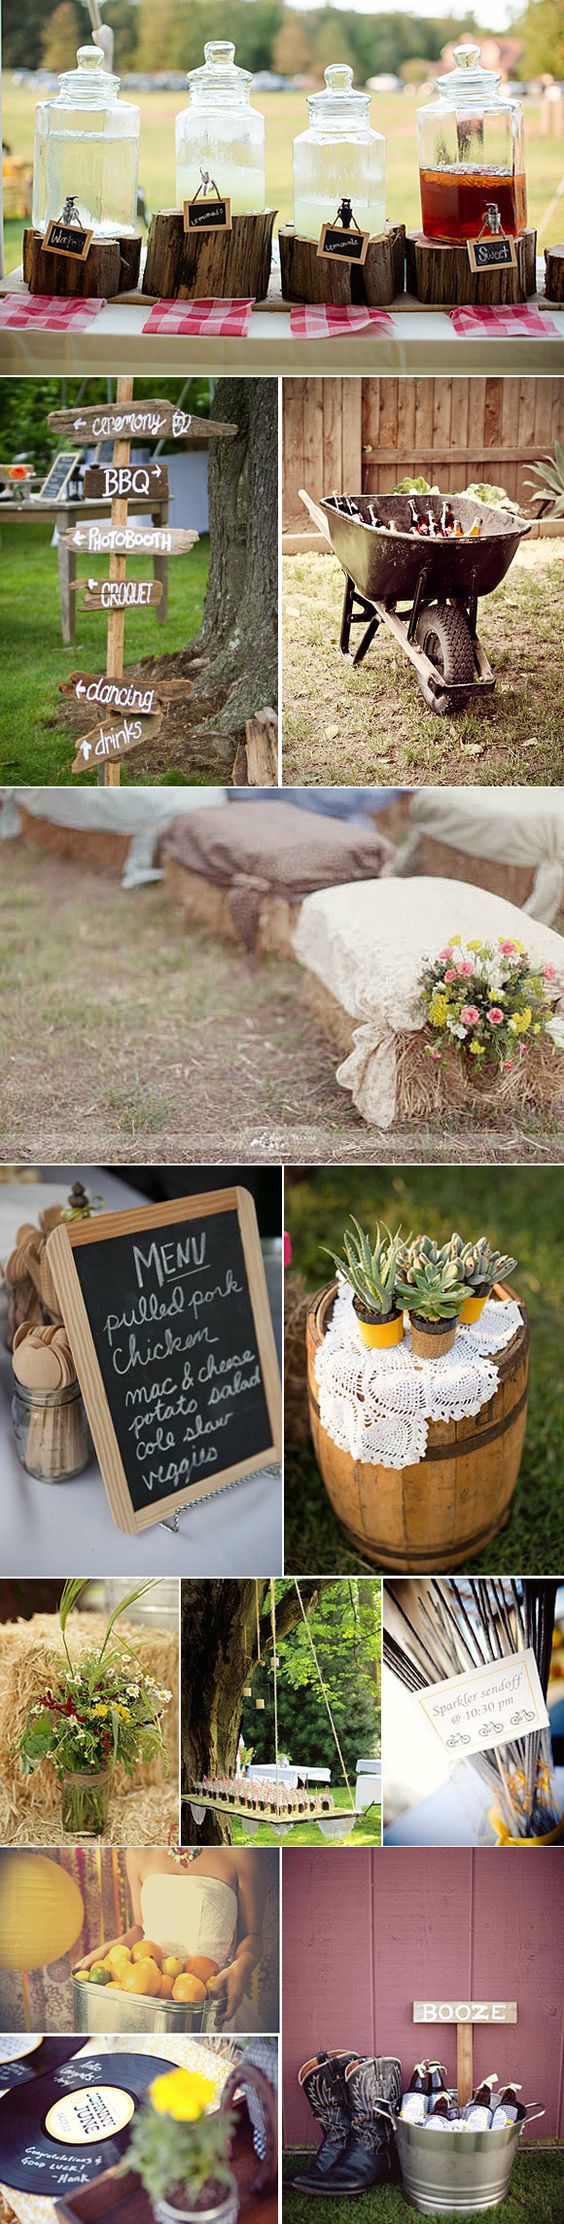 Rustic outdoor BBQ wedding ideas